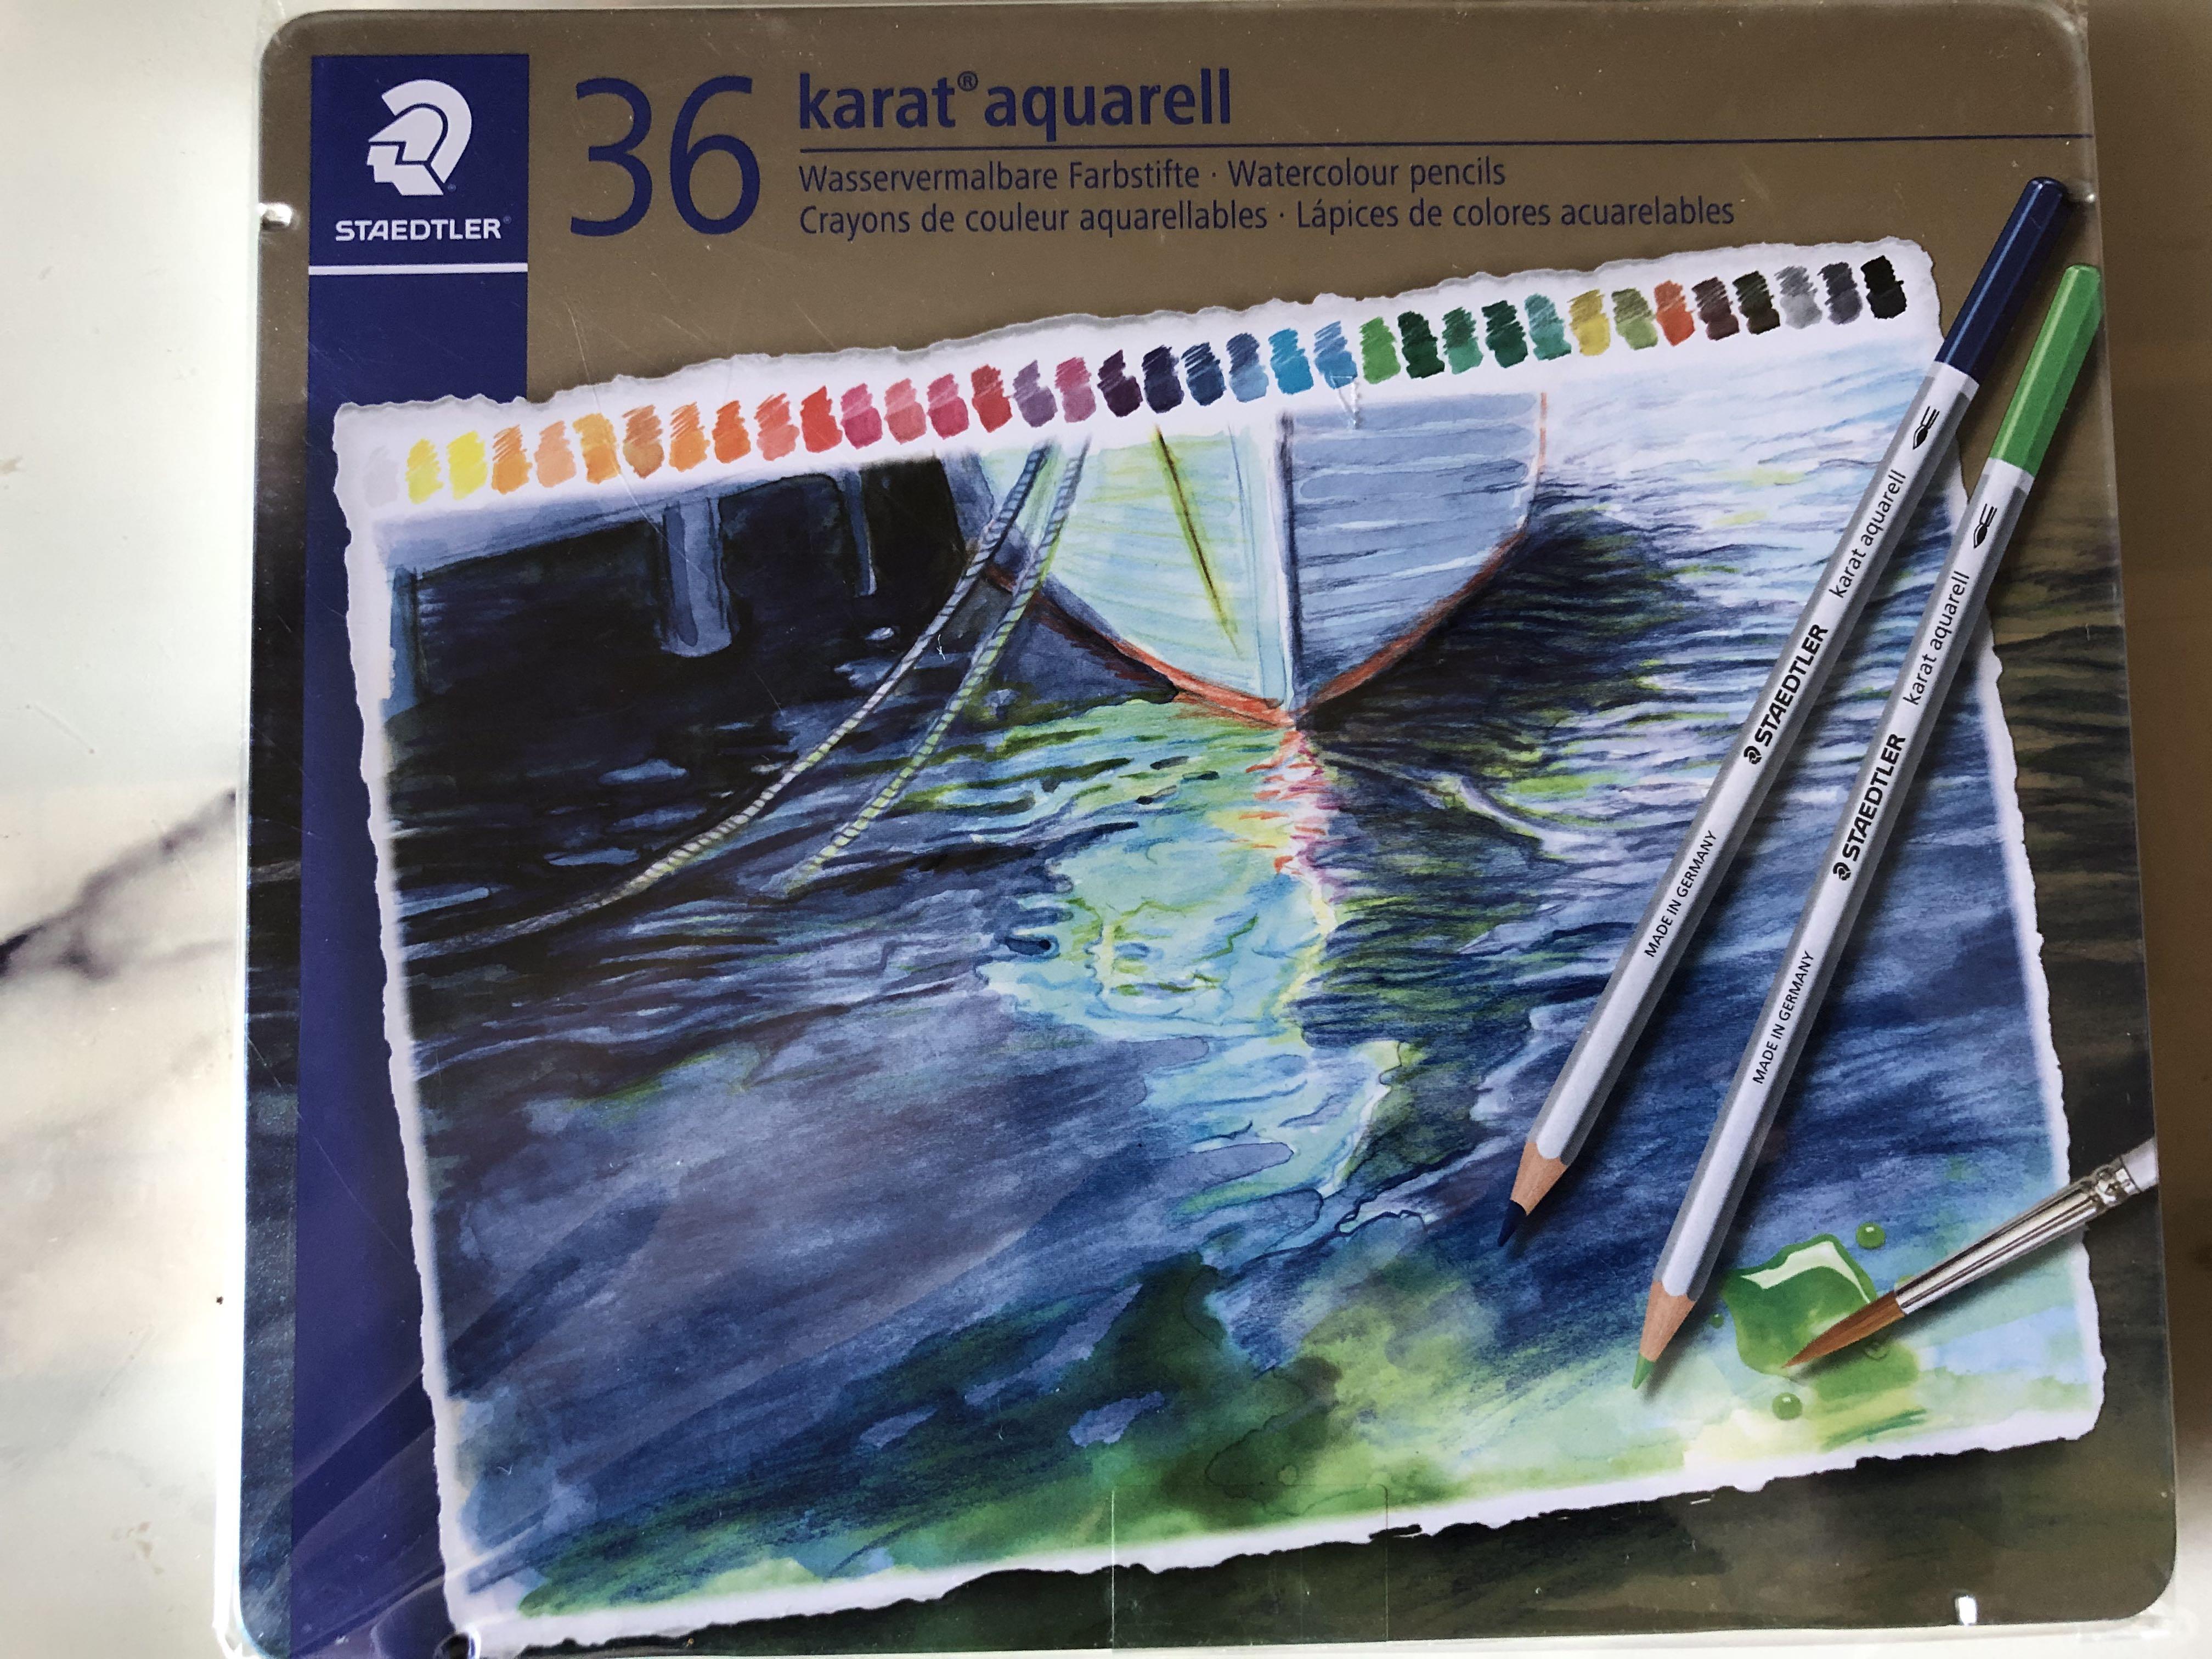 staedtler karat aquarell 36 水溶性木顏色筆, 興趣及遊戲, 手作＆自家